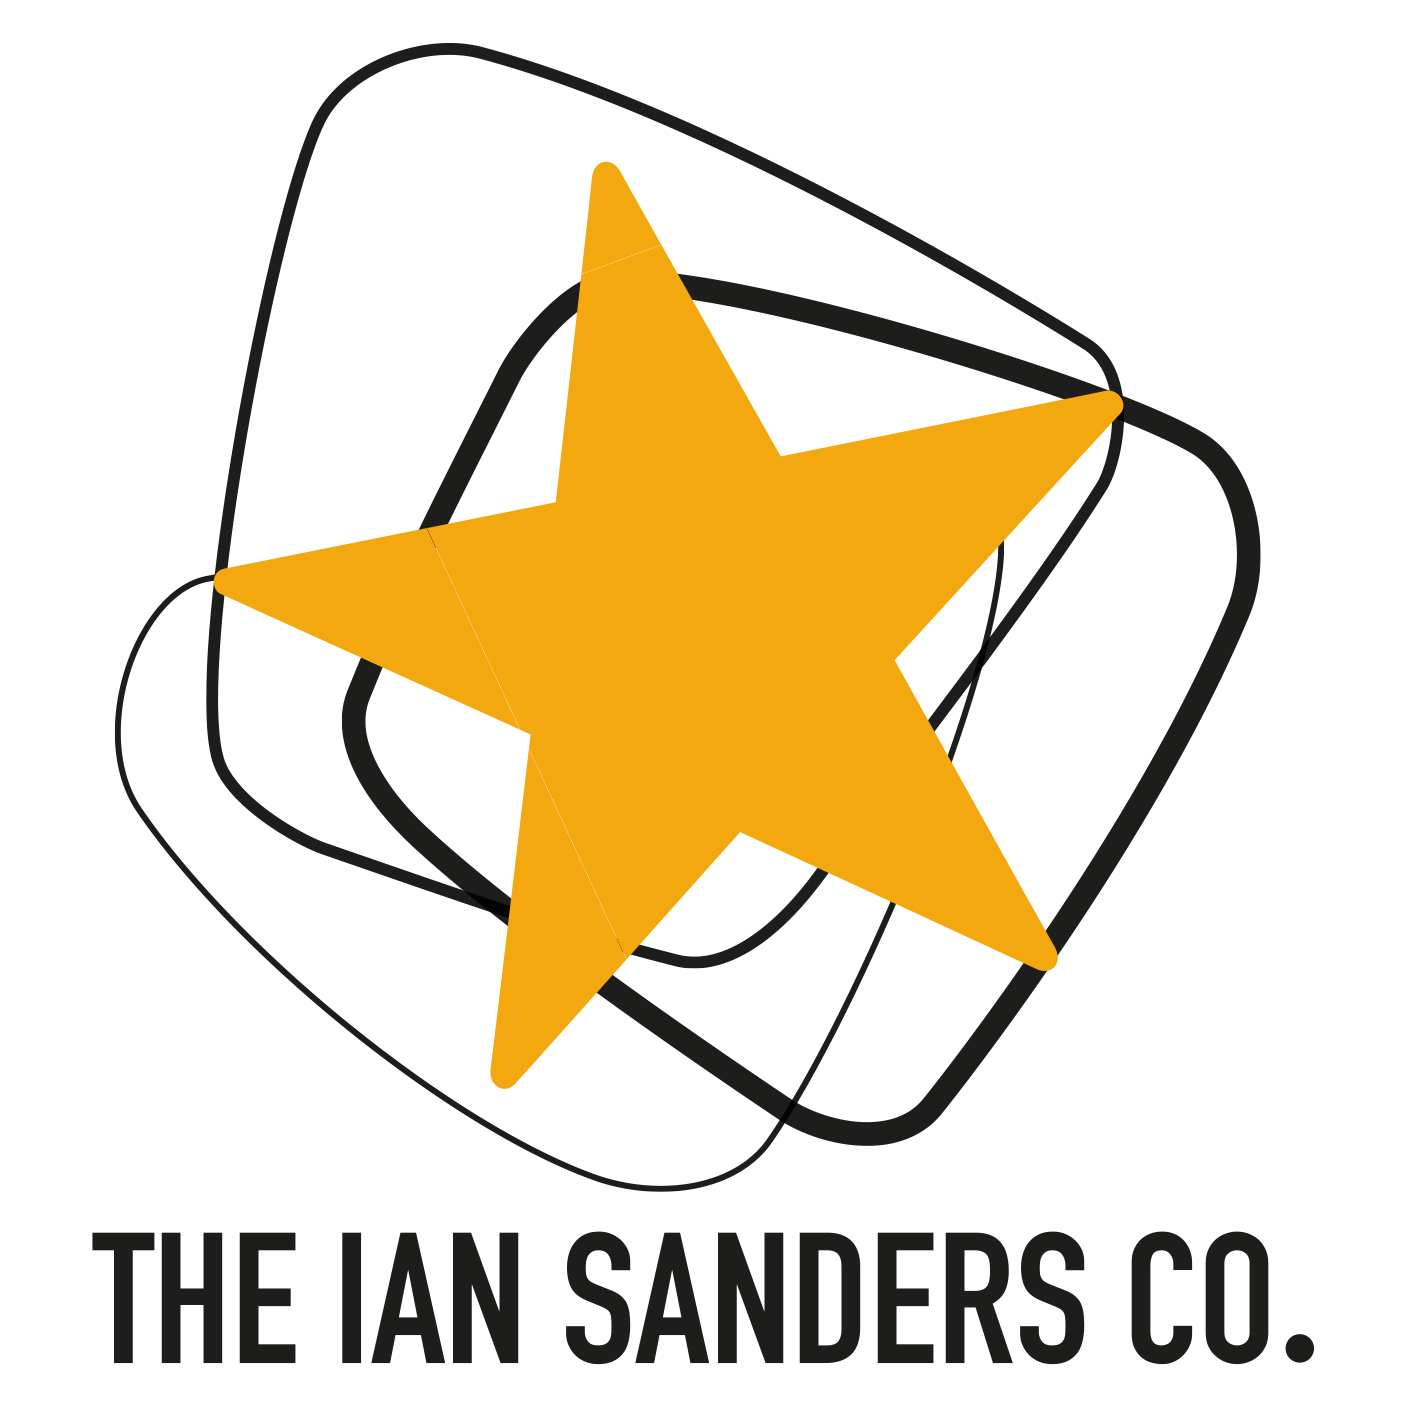 The Ian Sanders Co.